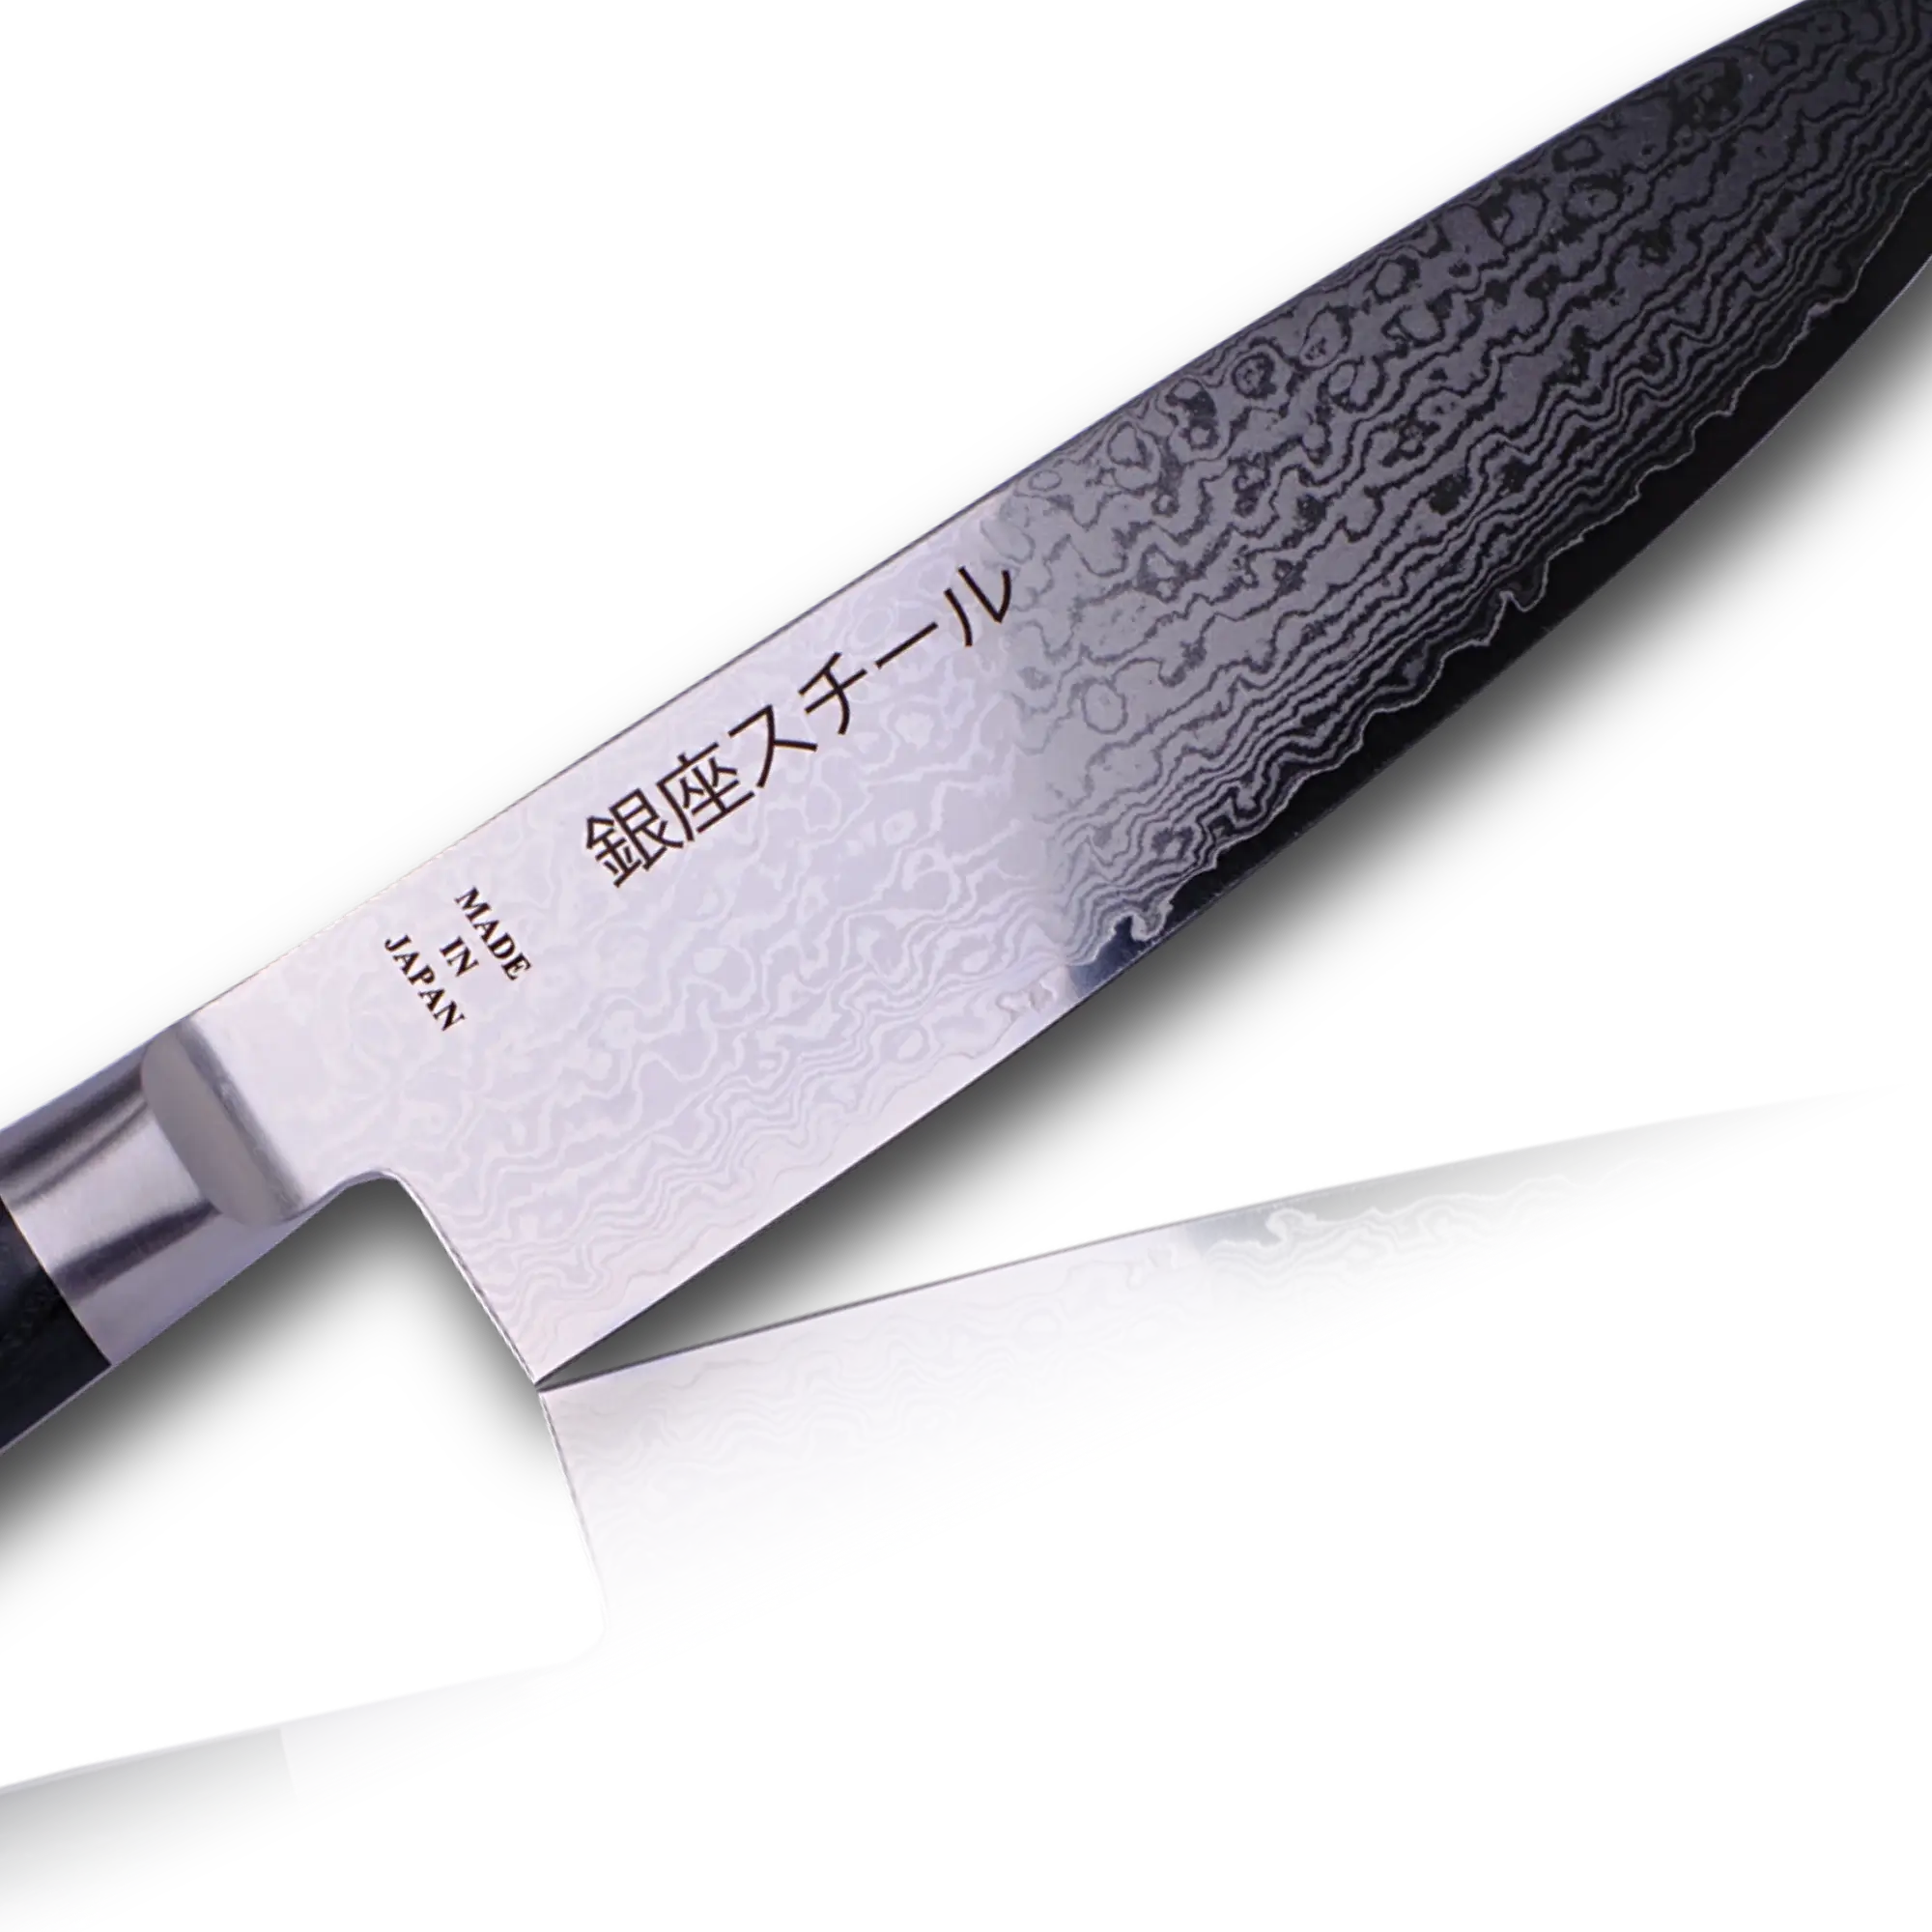 HAYAMI 200 - VG10 - Couteau Gyuto/Chef en Acier Damas 69 Couches 200mm